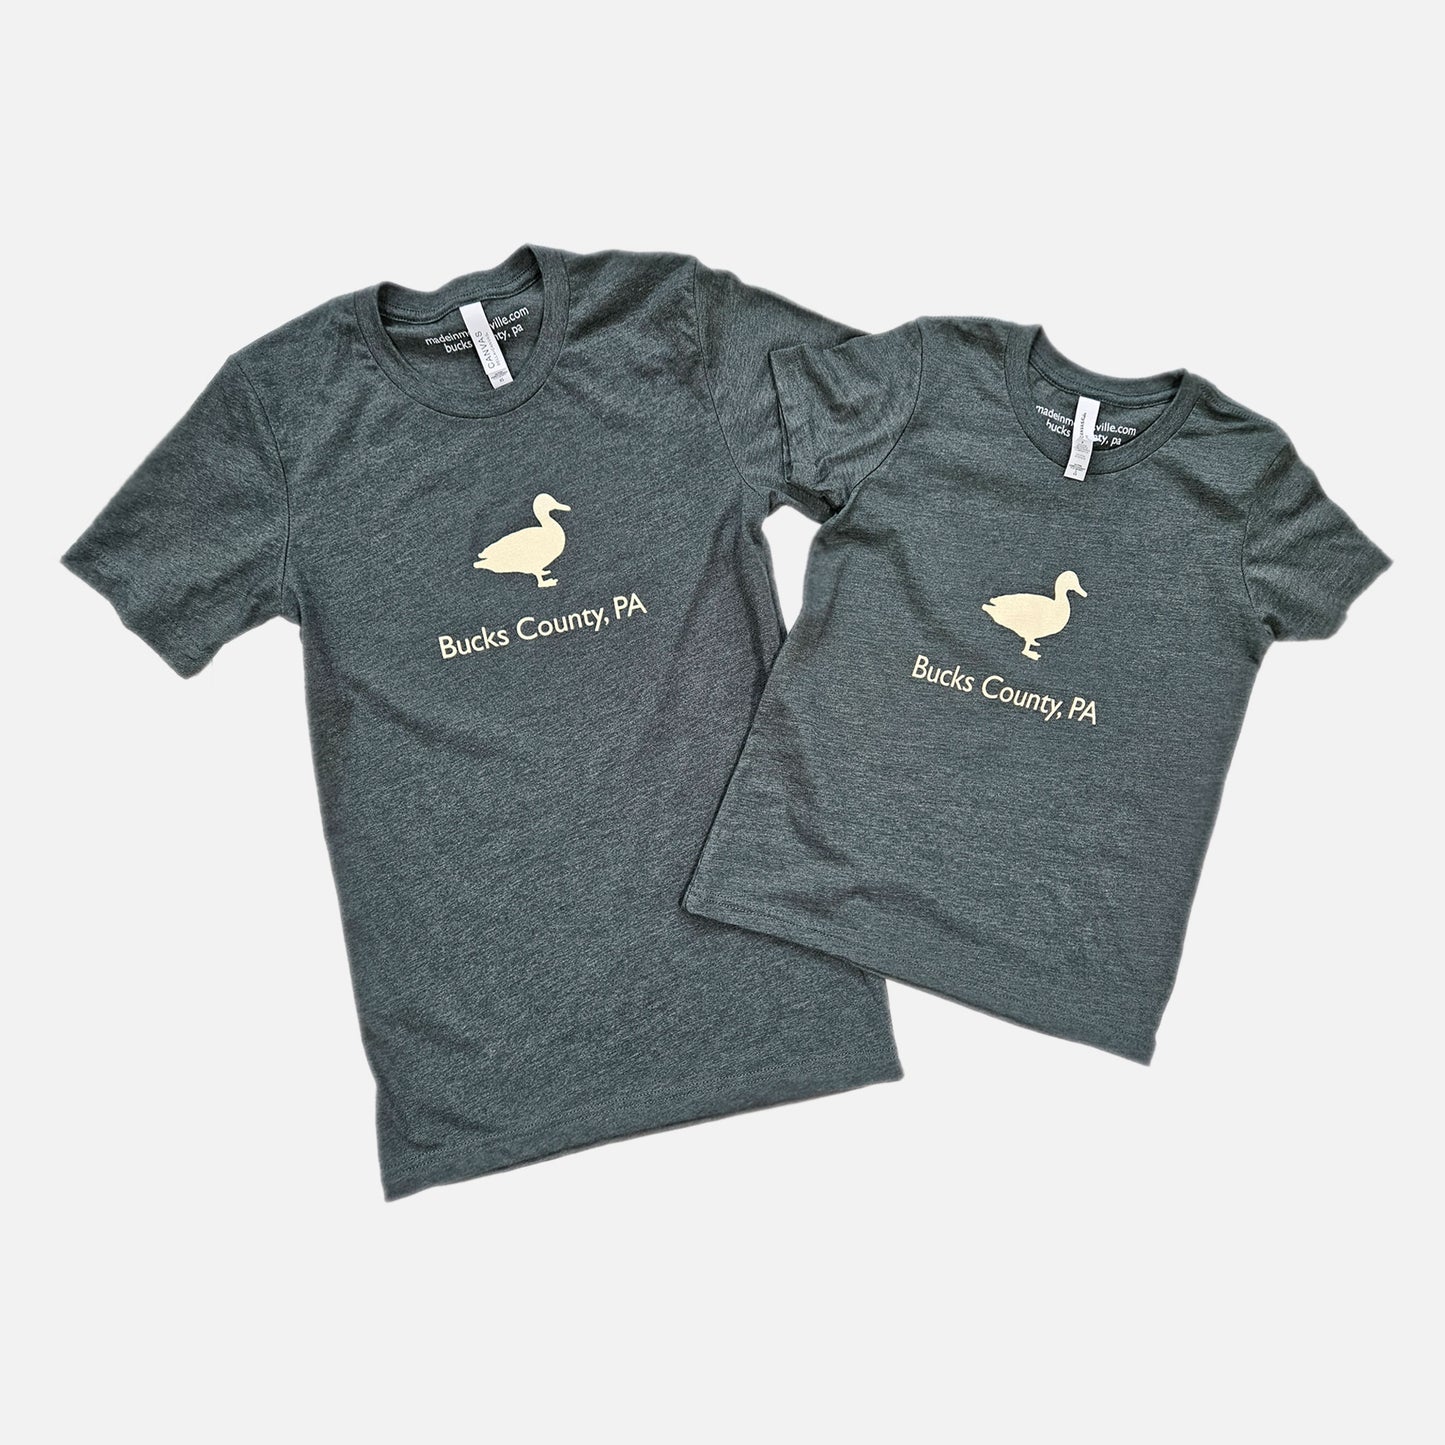 Bucks County Duck Portrait graphic T-shirt - heather forest